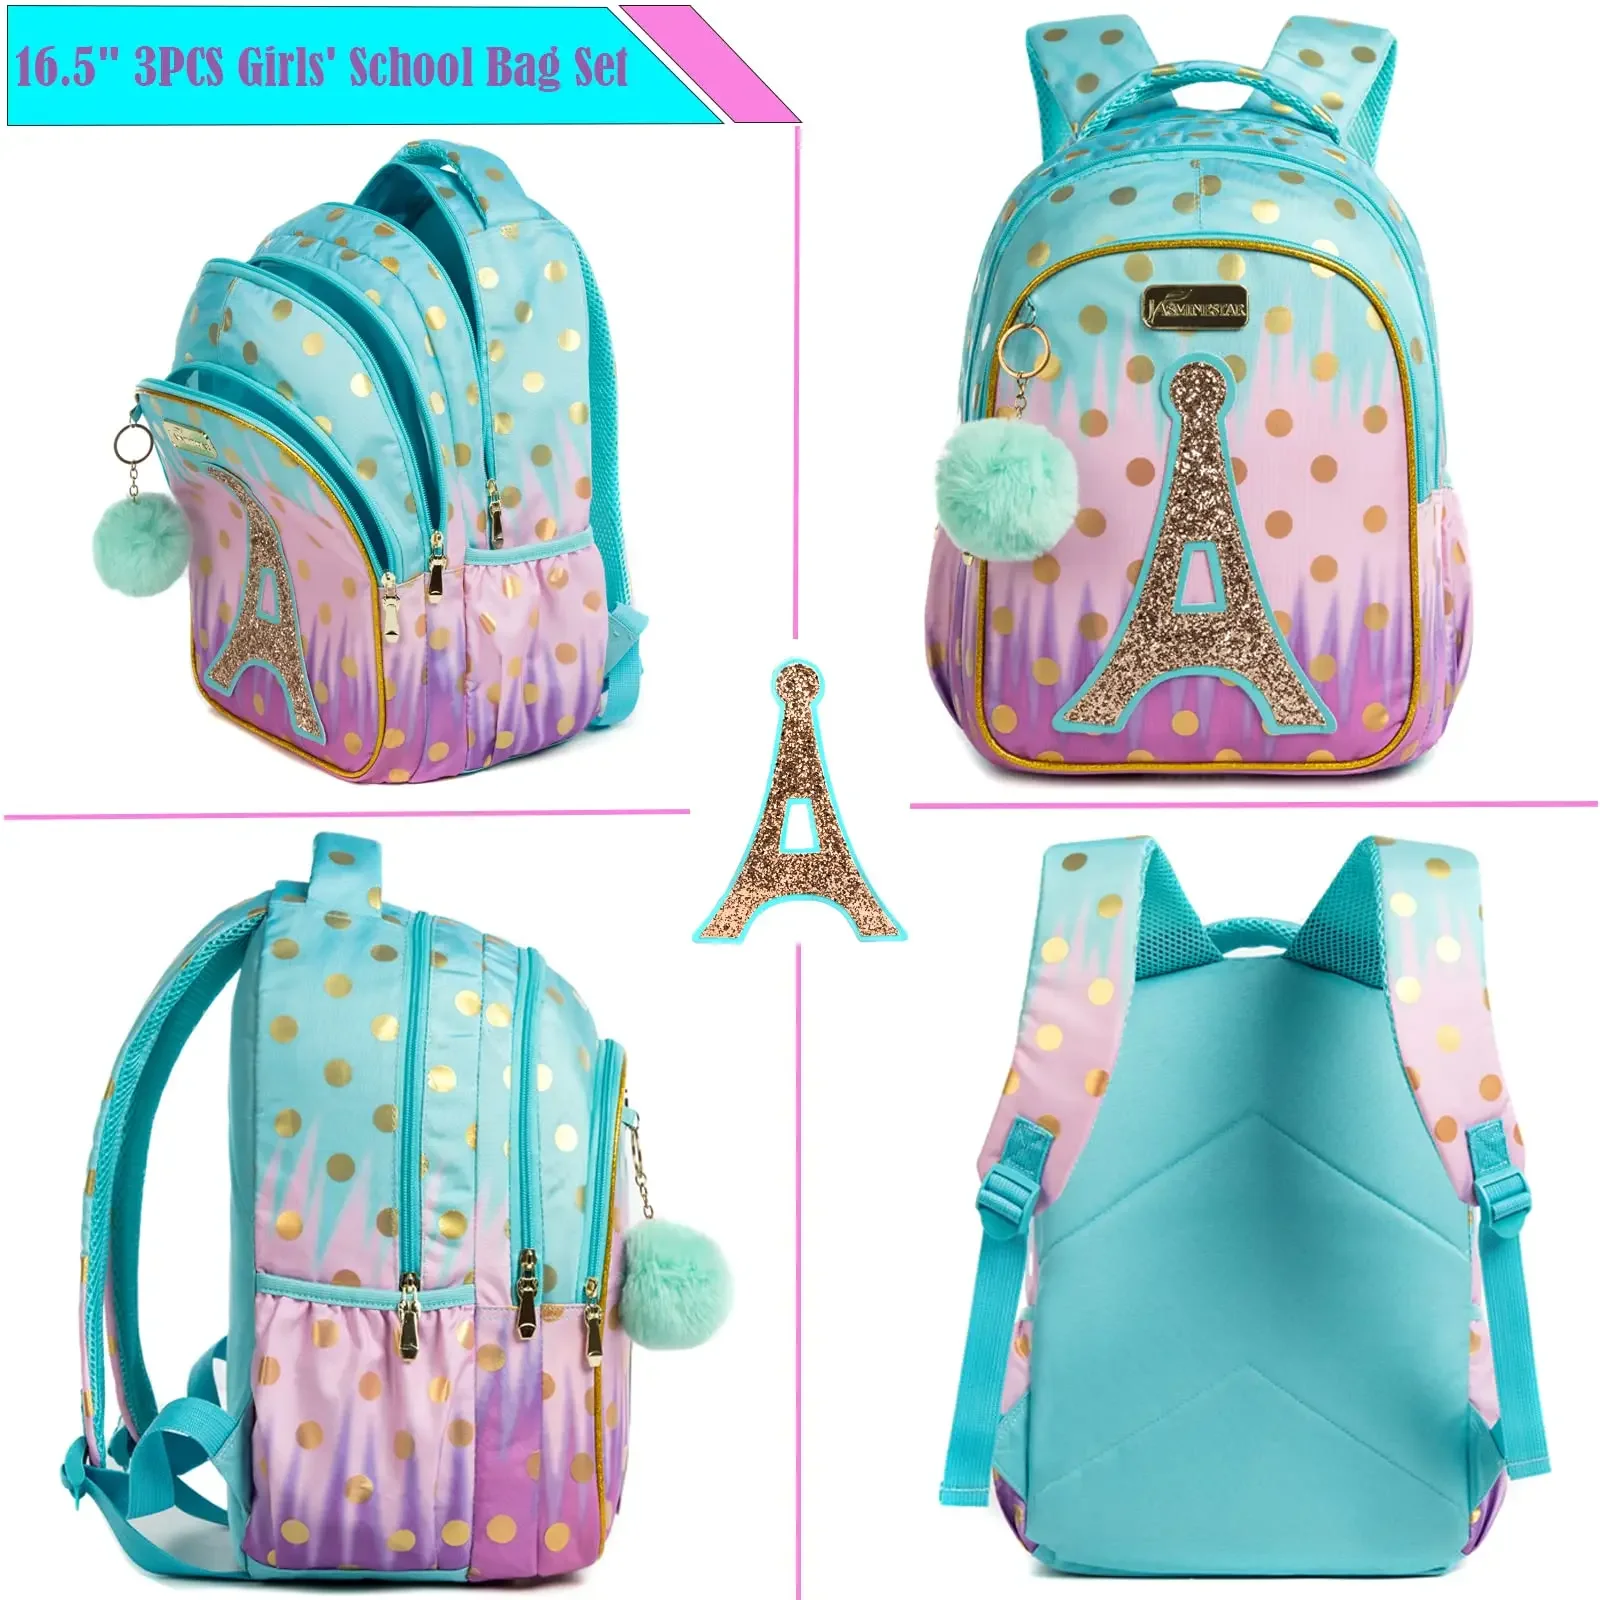 Children School Bags Kids Backpack Set in Primary Schoolbag for Teenager Girls Sequin Tower School Bags Waterproof Book Bags